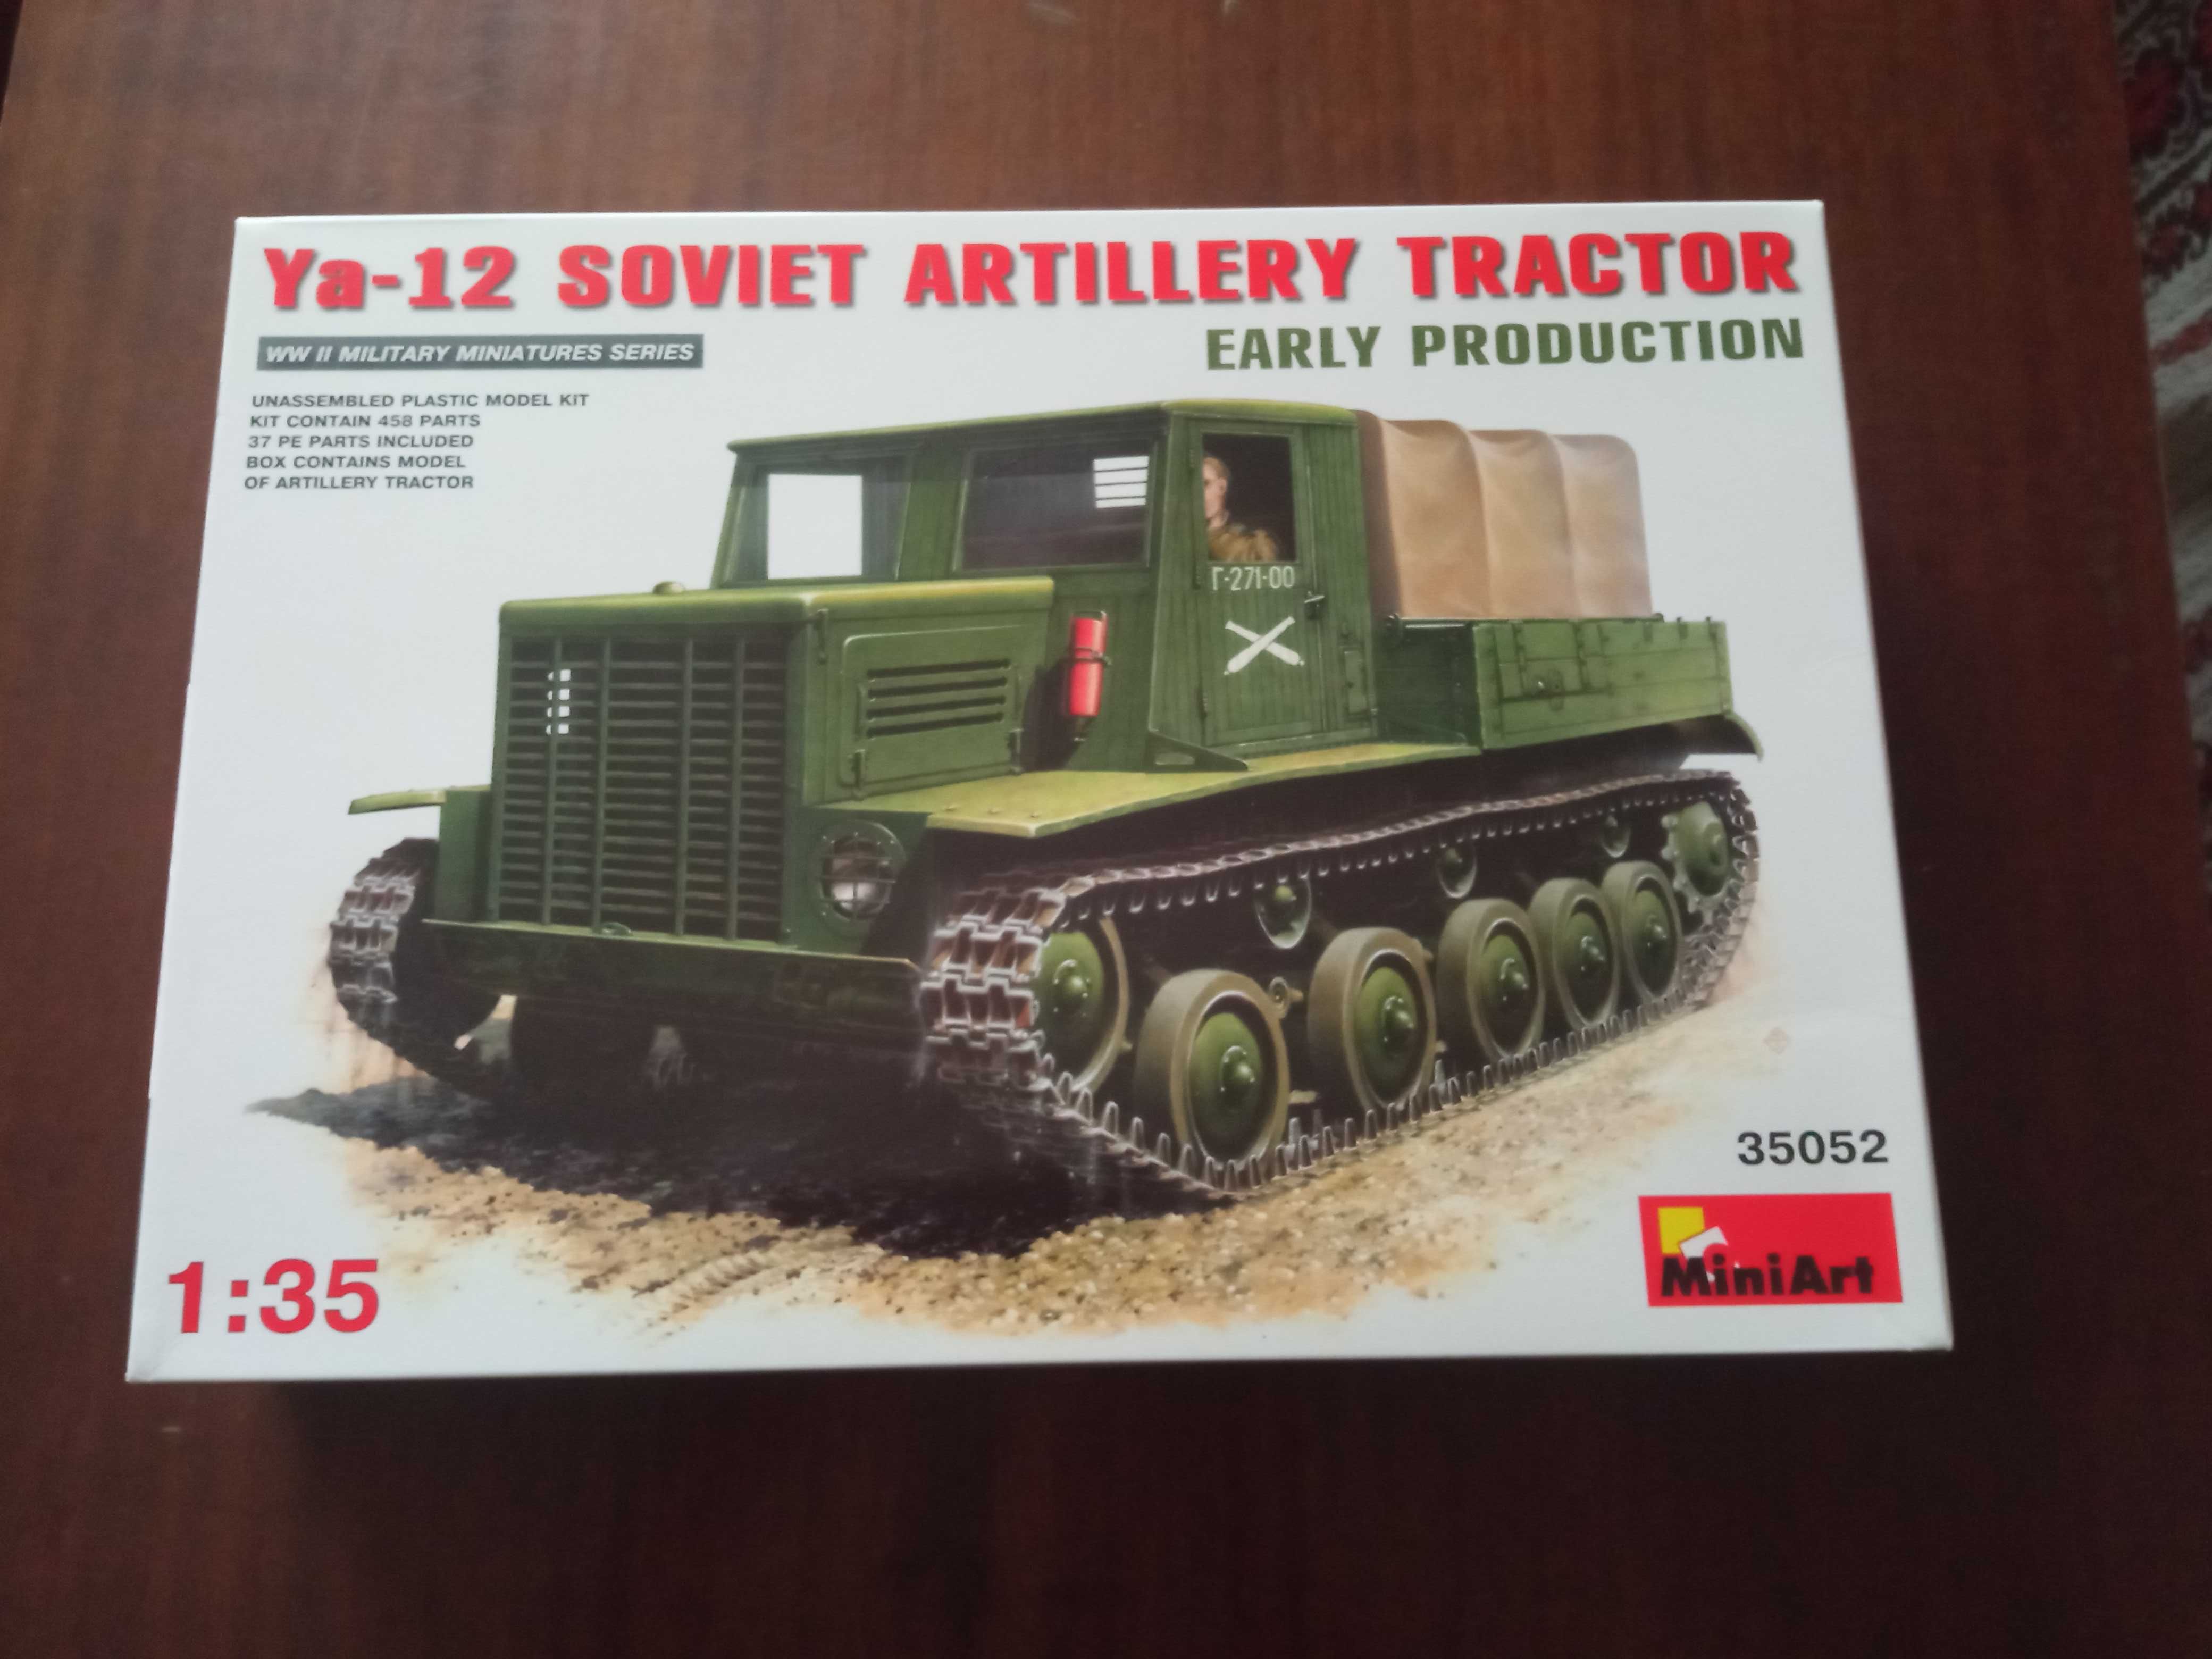 YA-12 Soviet Artillery Tractor, Early Production - Miniart 35052